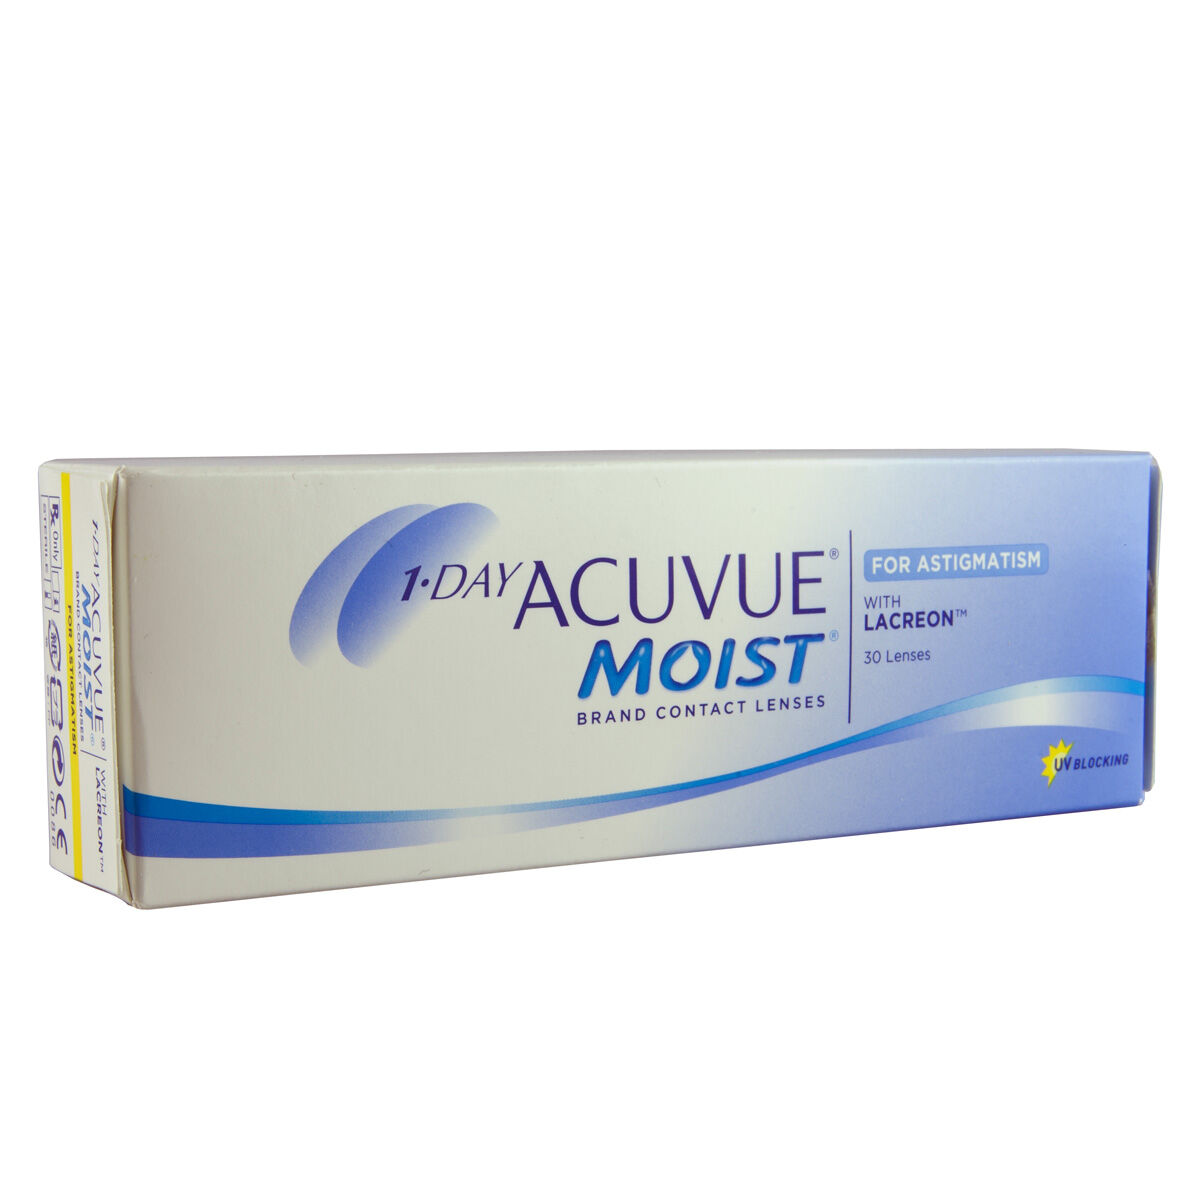 Acuvue 1 Day Acuvue Moist for Astigmatism (30 Contact Lenses), Johnson & Johnson, Daily Toric Lenses, Etafilcon A